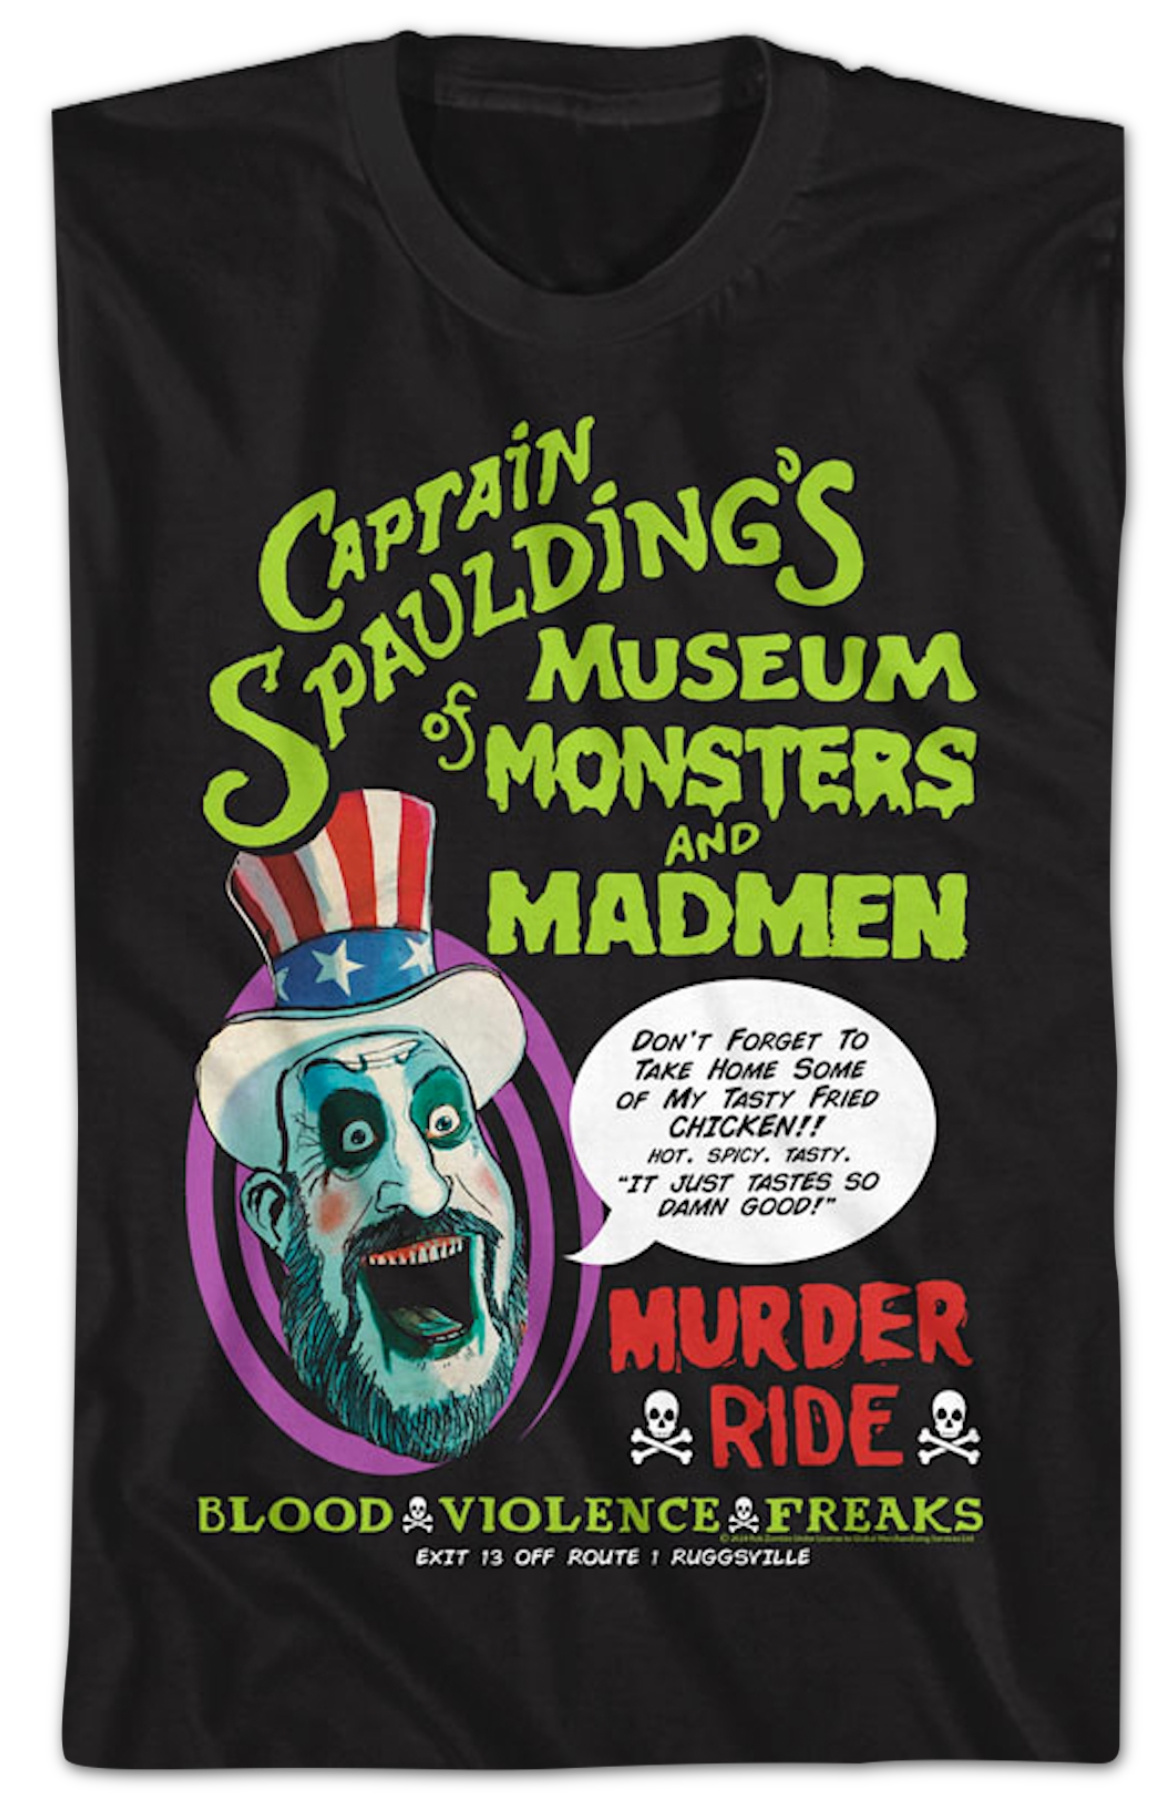 Captain Spaulding's Murder Ride House Of 1000 Corpses T-Shirt